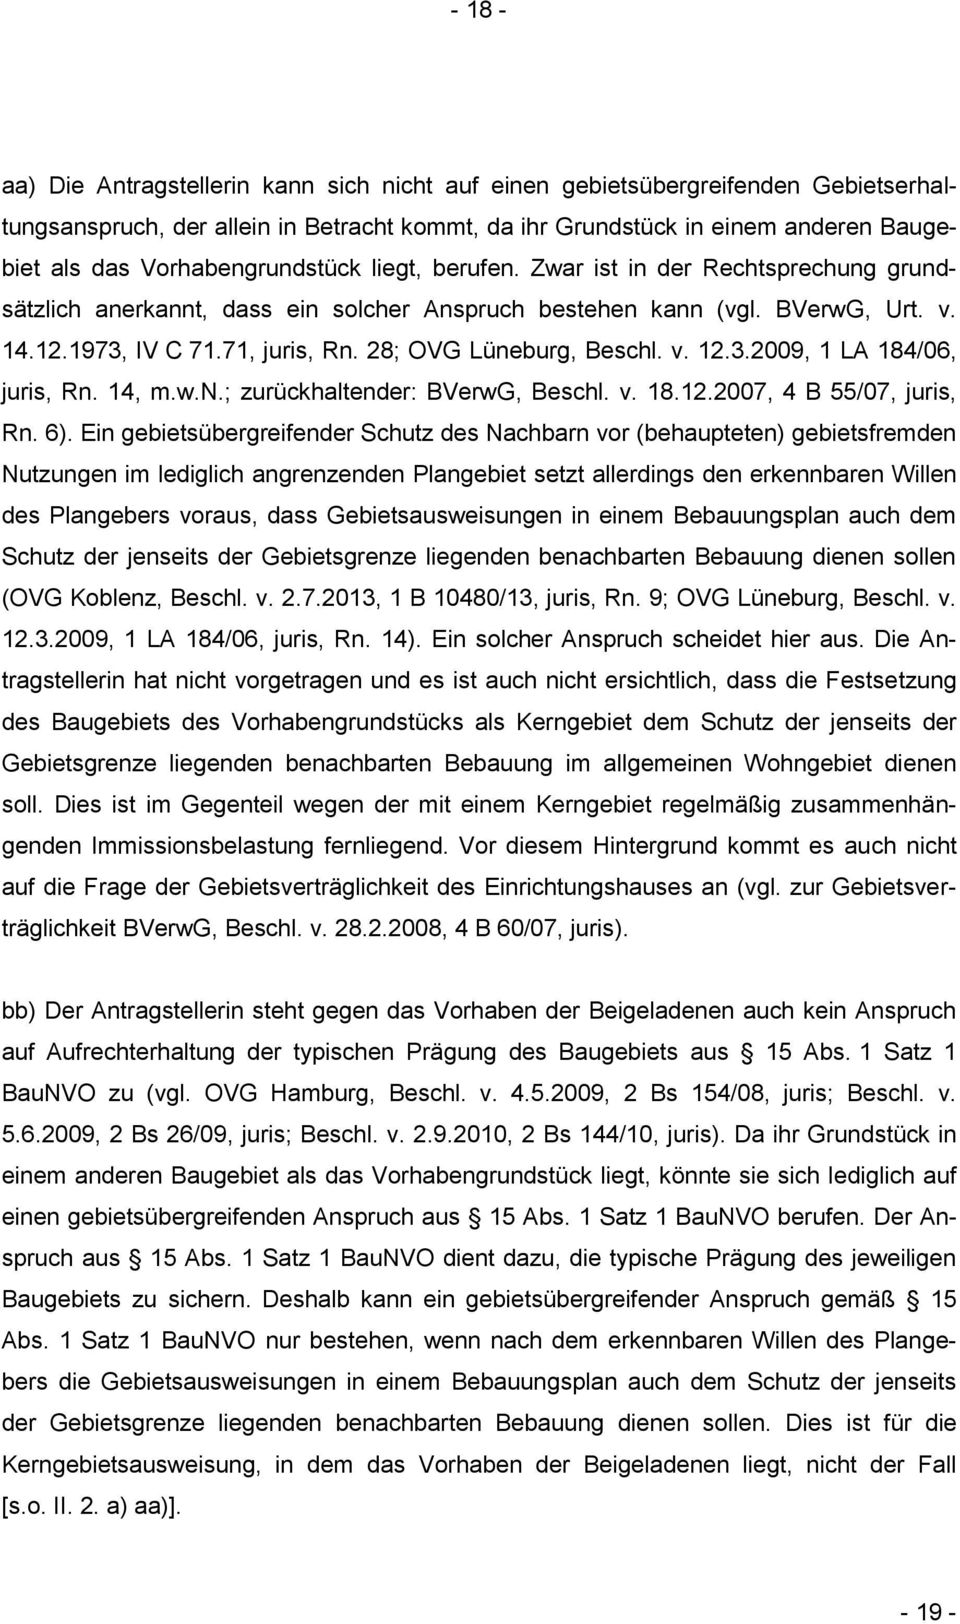 28; OVG Lüneburg, Beschl. v. 12.3.2009, 1 LA 184/06, juris, Rn. 14, m.w.n.; zurückhaltender: BVerwG, Beschl. v. 18.12.2007, 4 B 55/07, juris, Rn. 6).